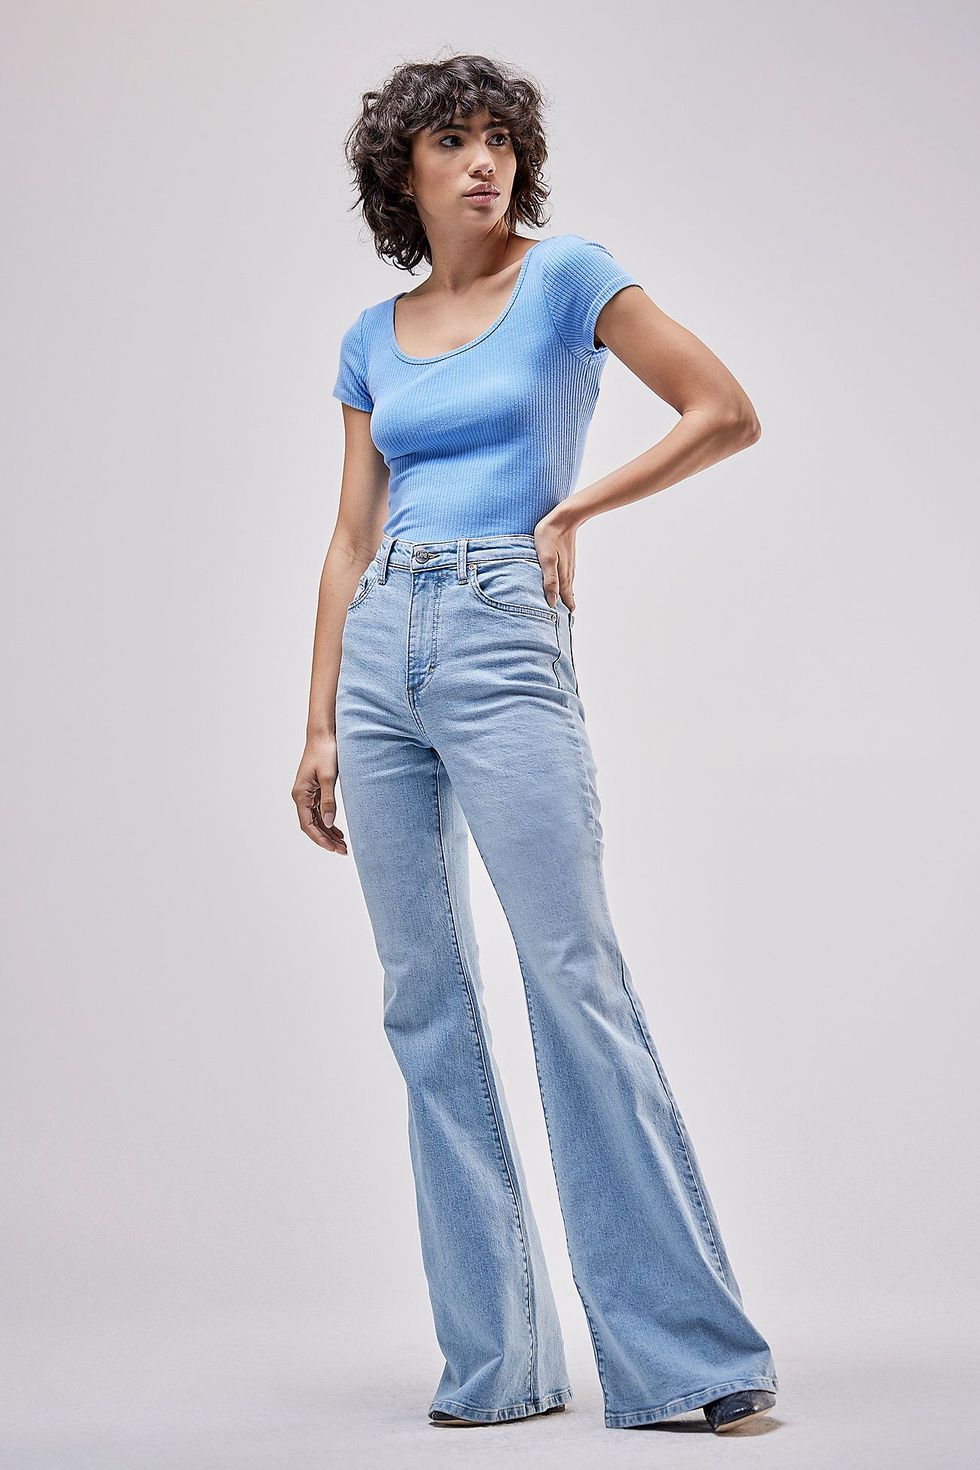 13 Best Jeans for Tall Women in 2023 - Best Denim Brands for Tall